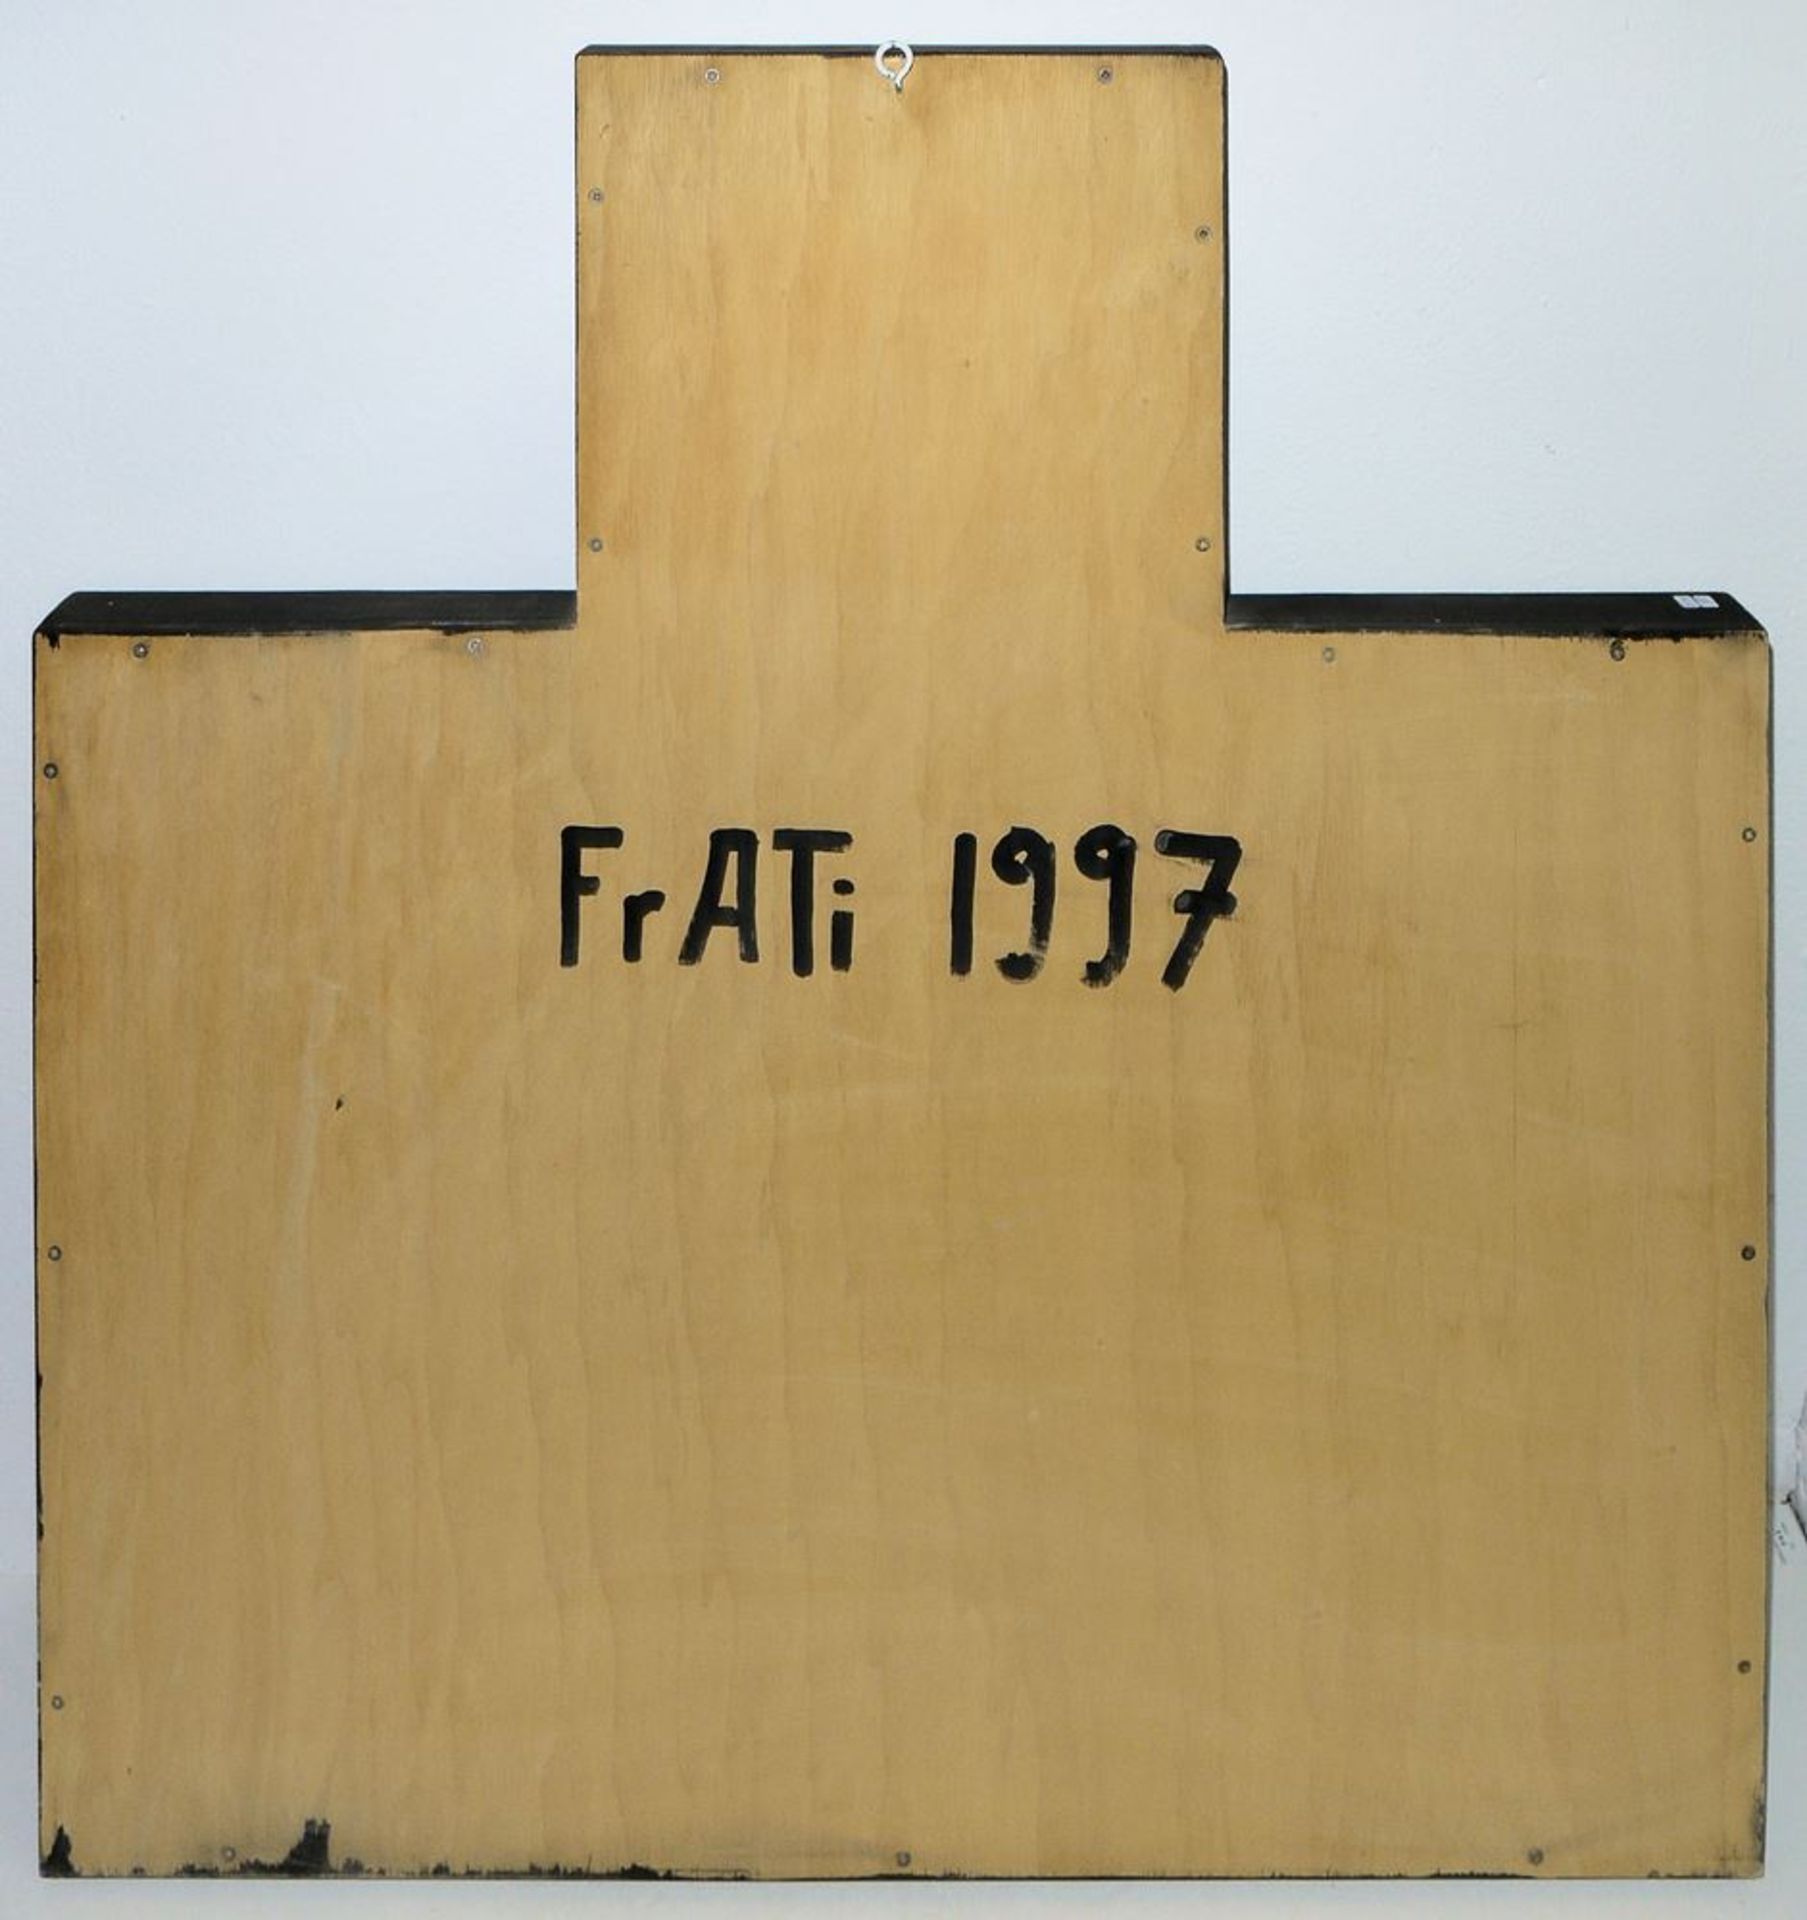 Doug Frati, 7tlg. Holzrelief mit geometrischen Motiven, mit Dokumentation - Image 2 of 2